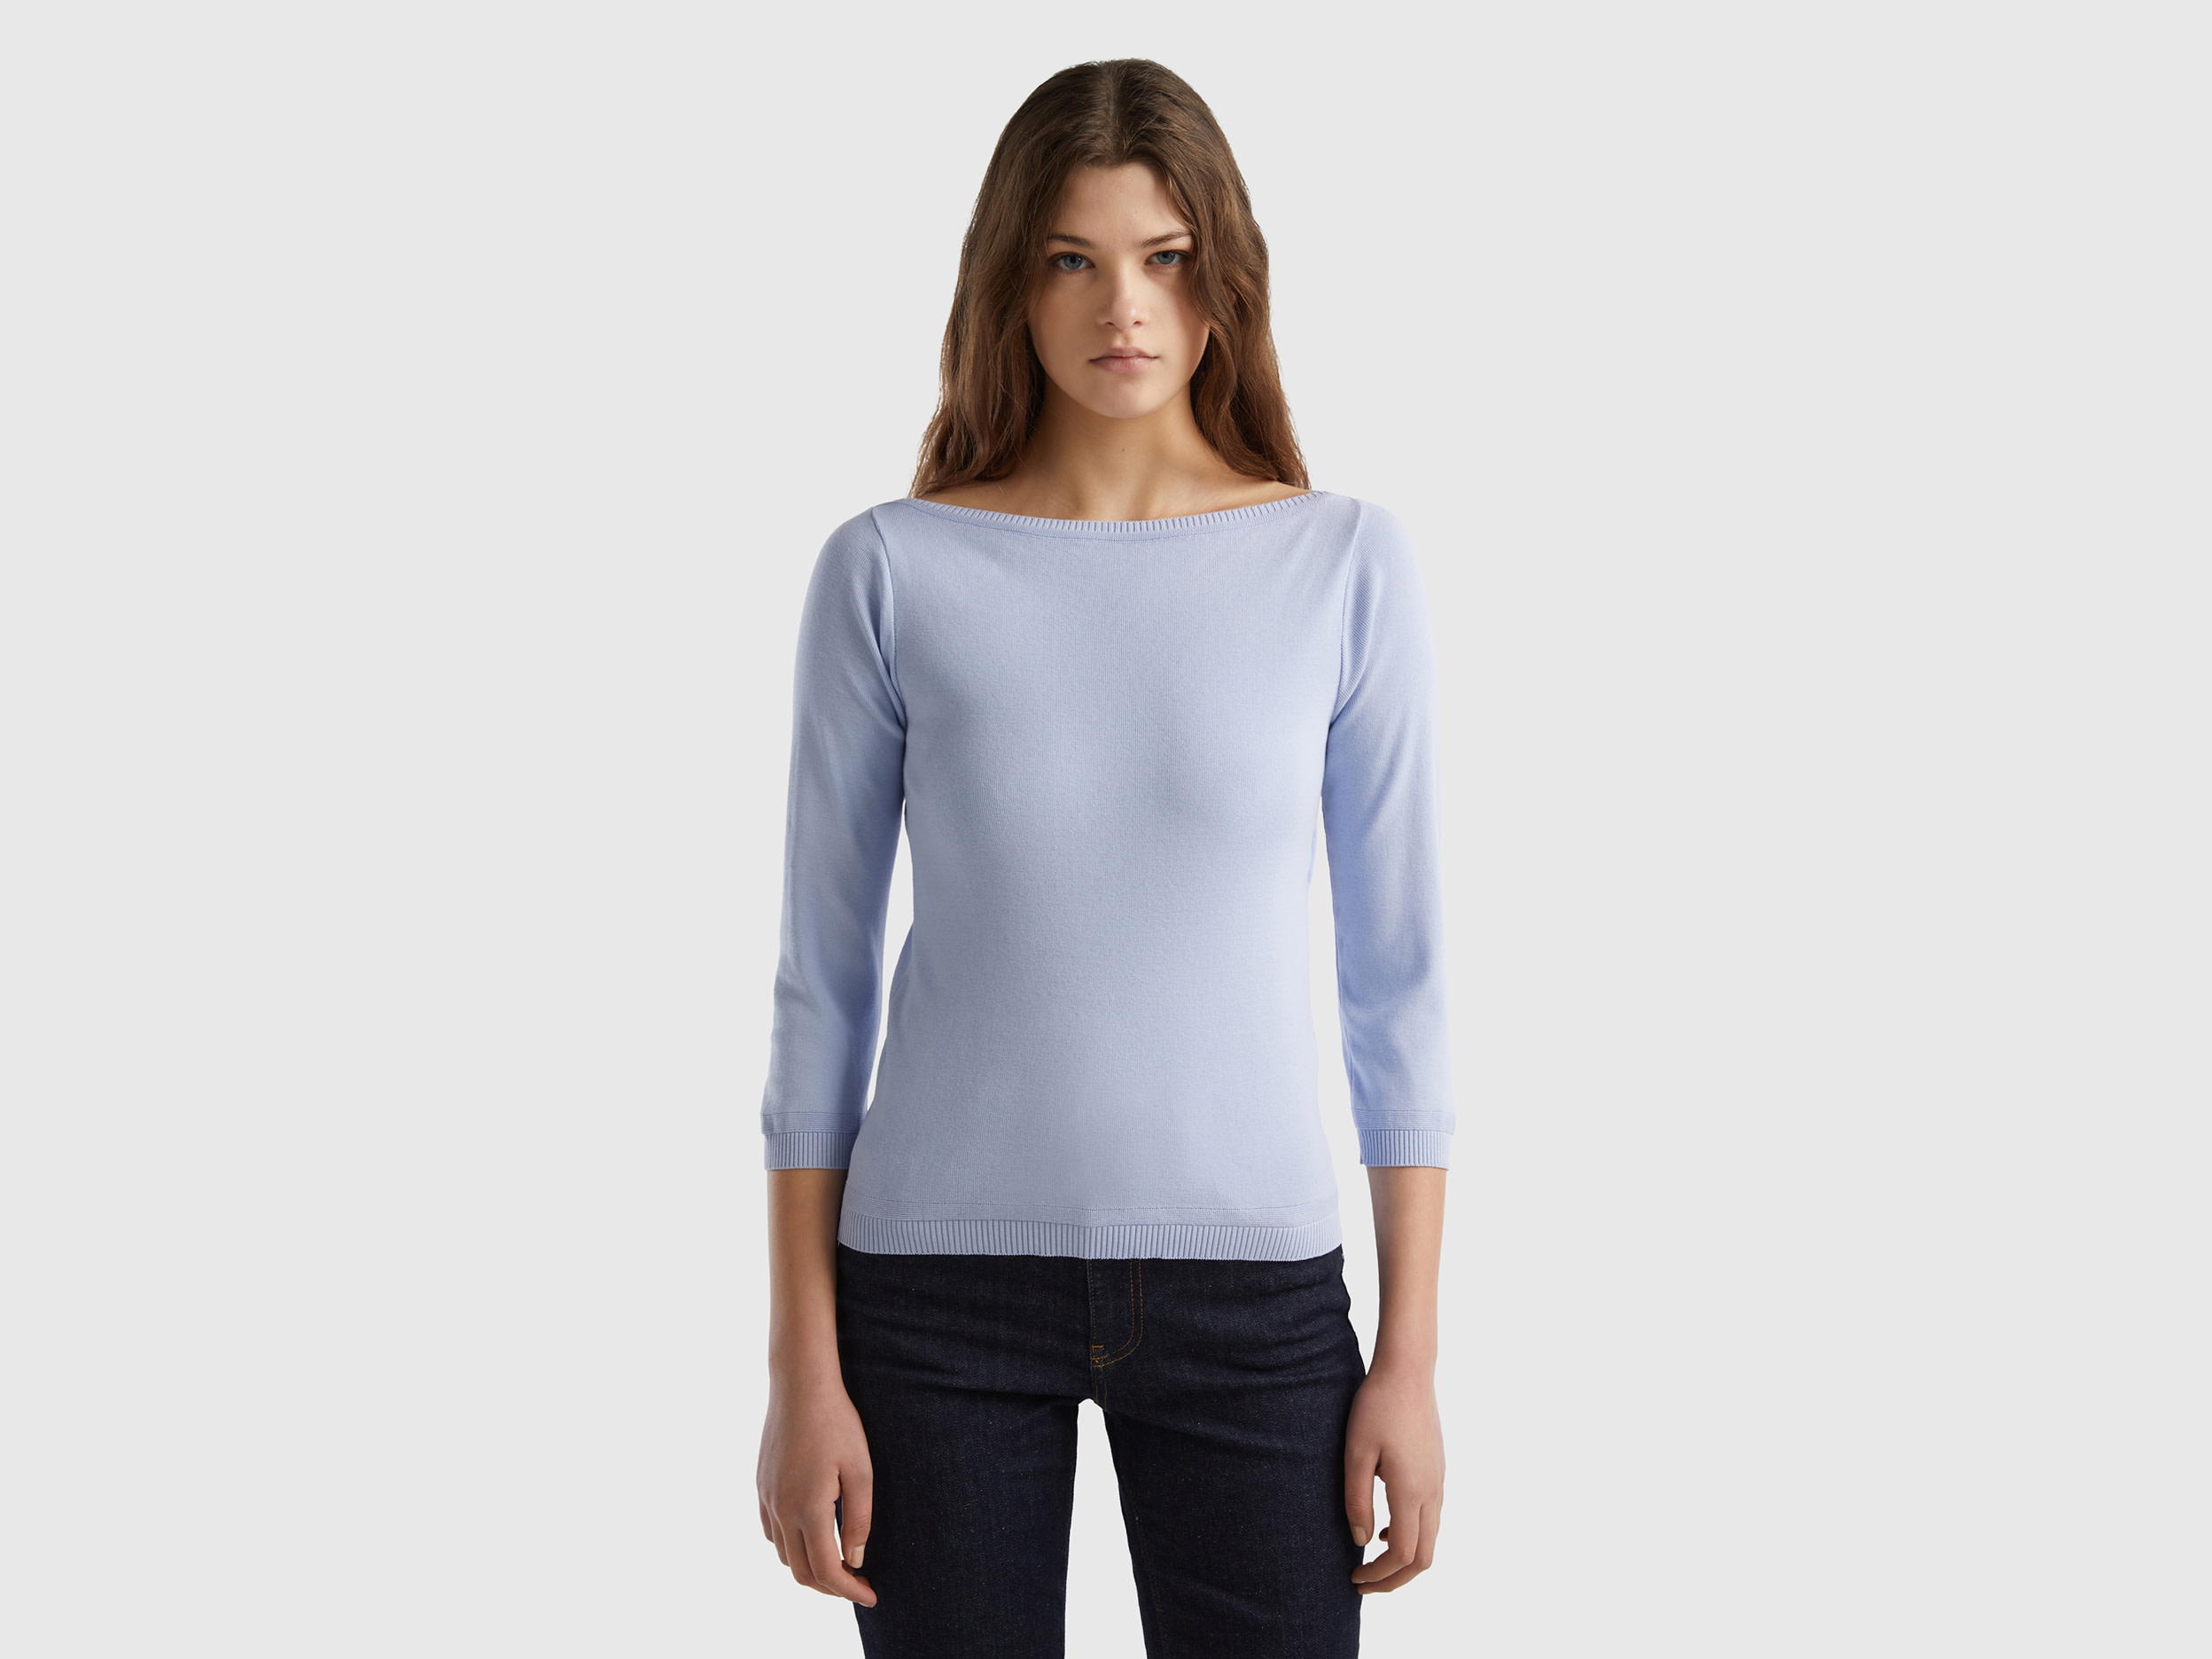 Benetton, 100% Cotton Boat Neck Sweater, size S, Sky Blue, Women